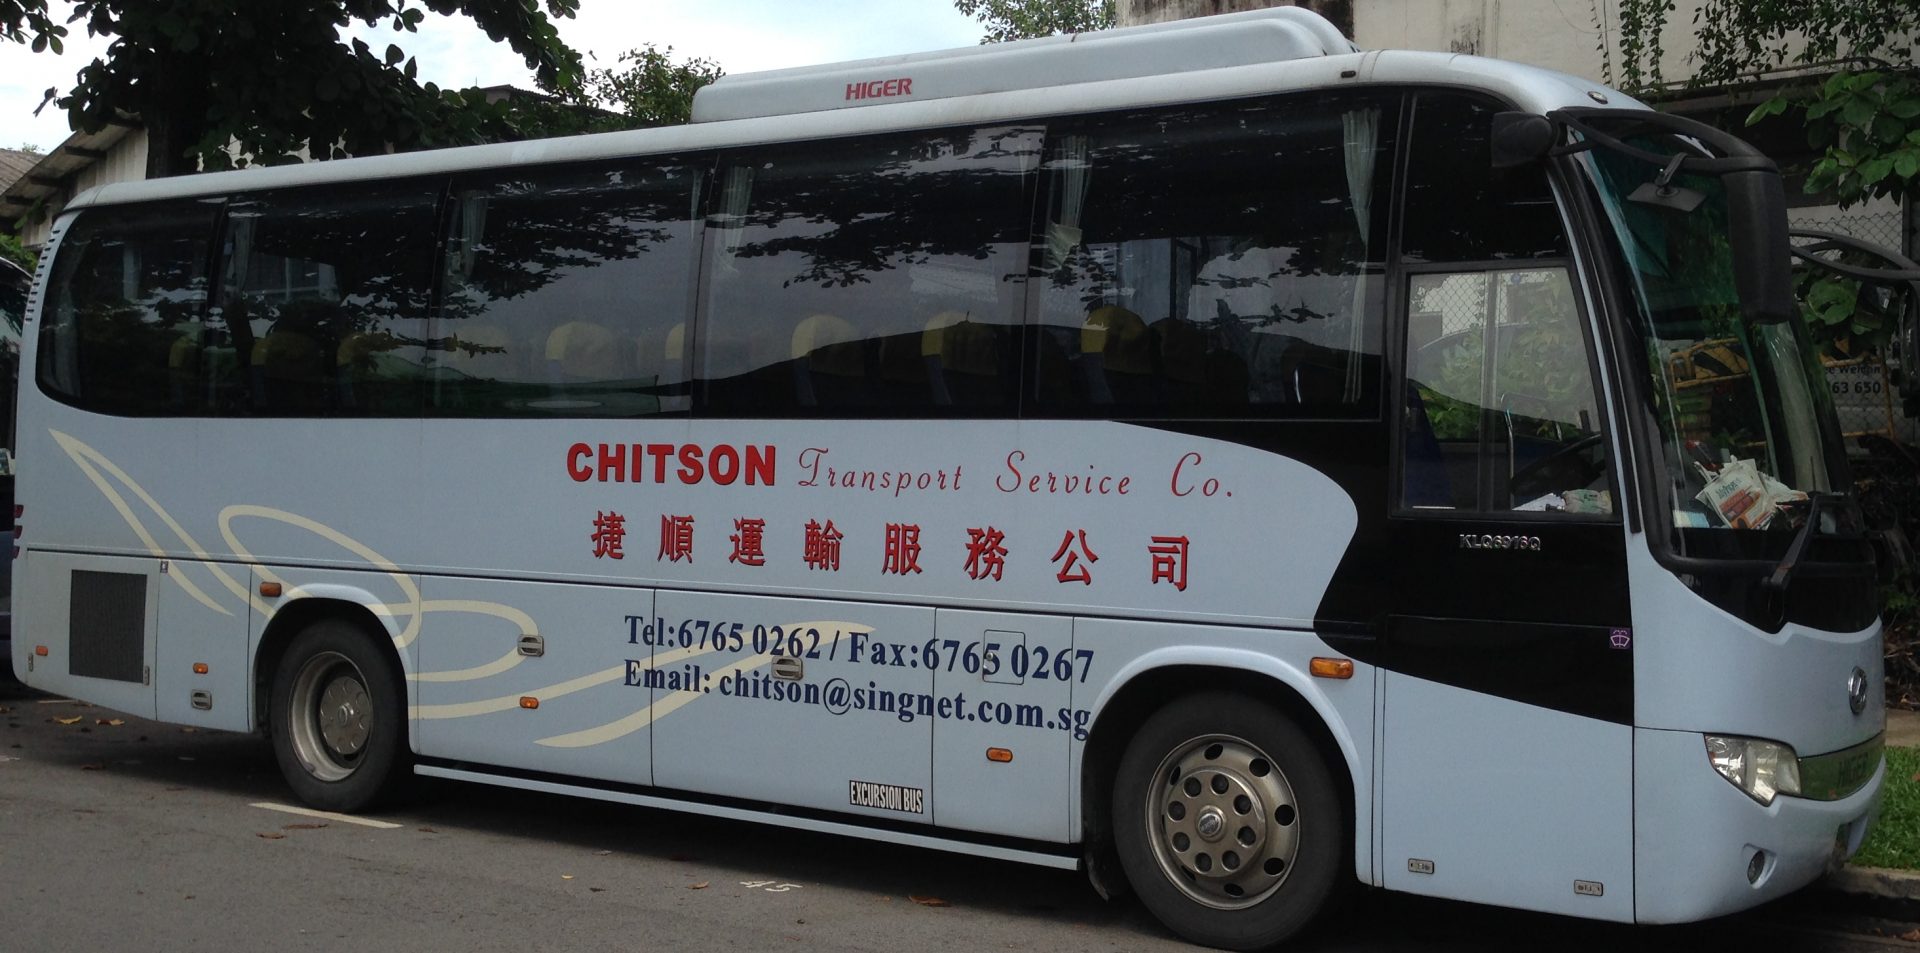 Chitson Transport